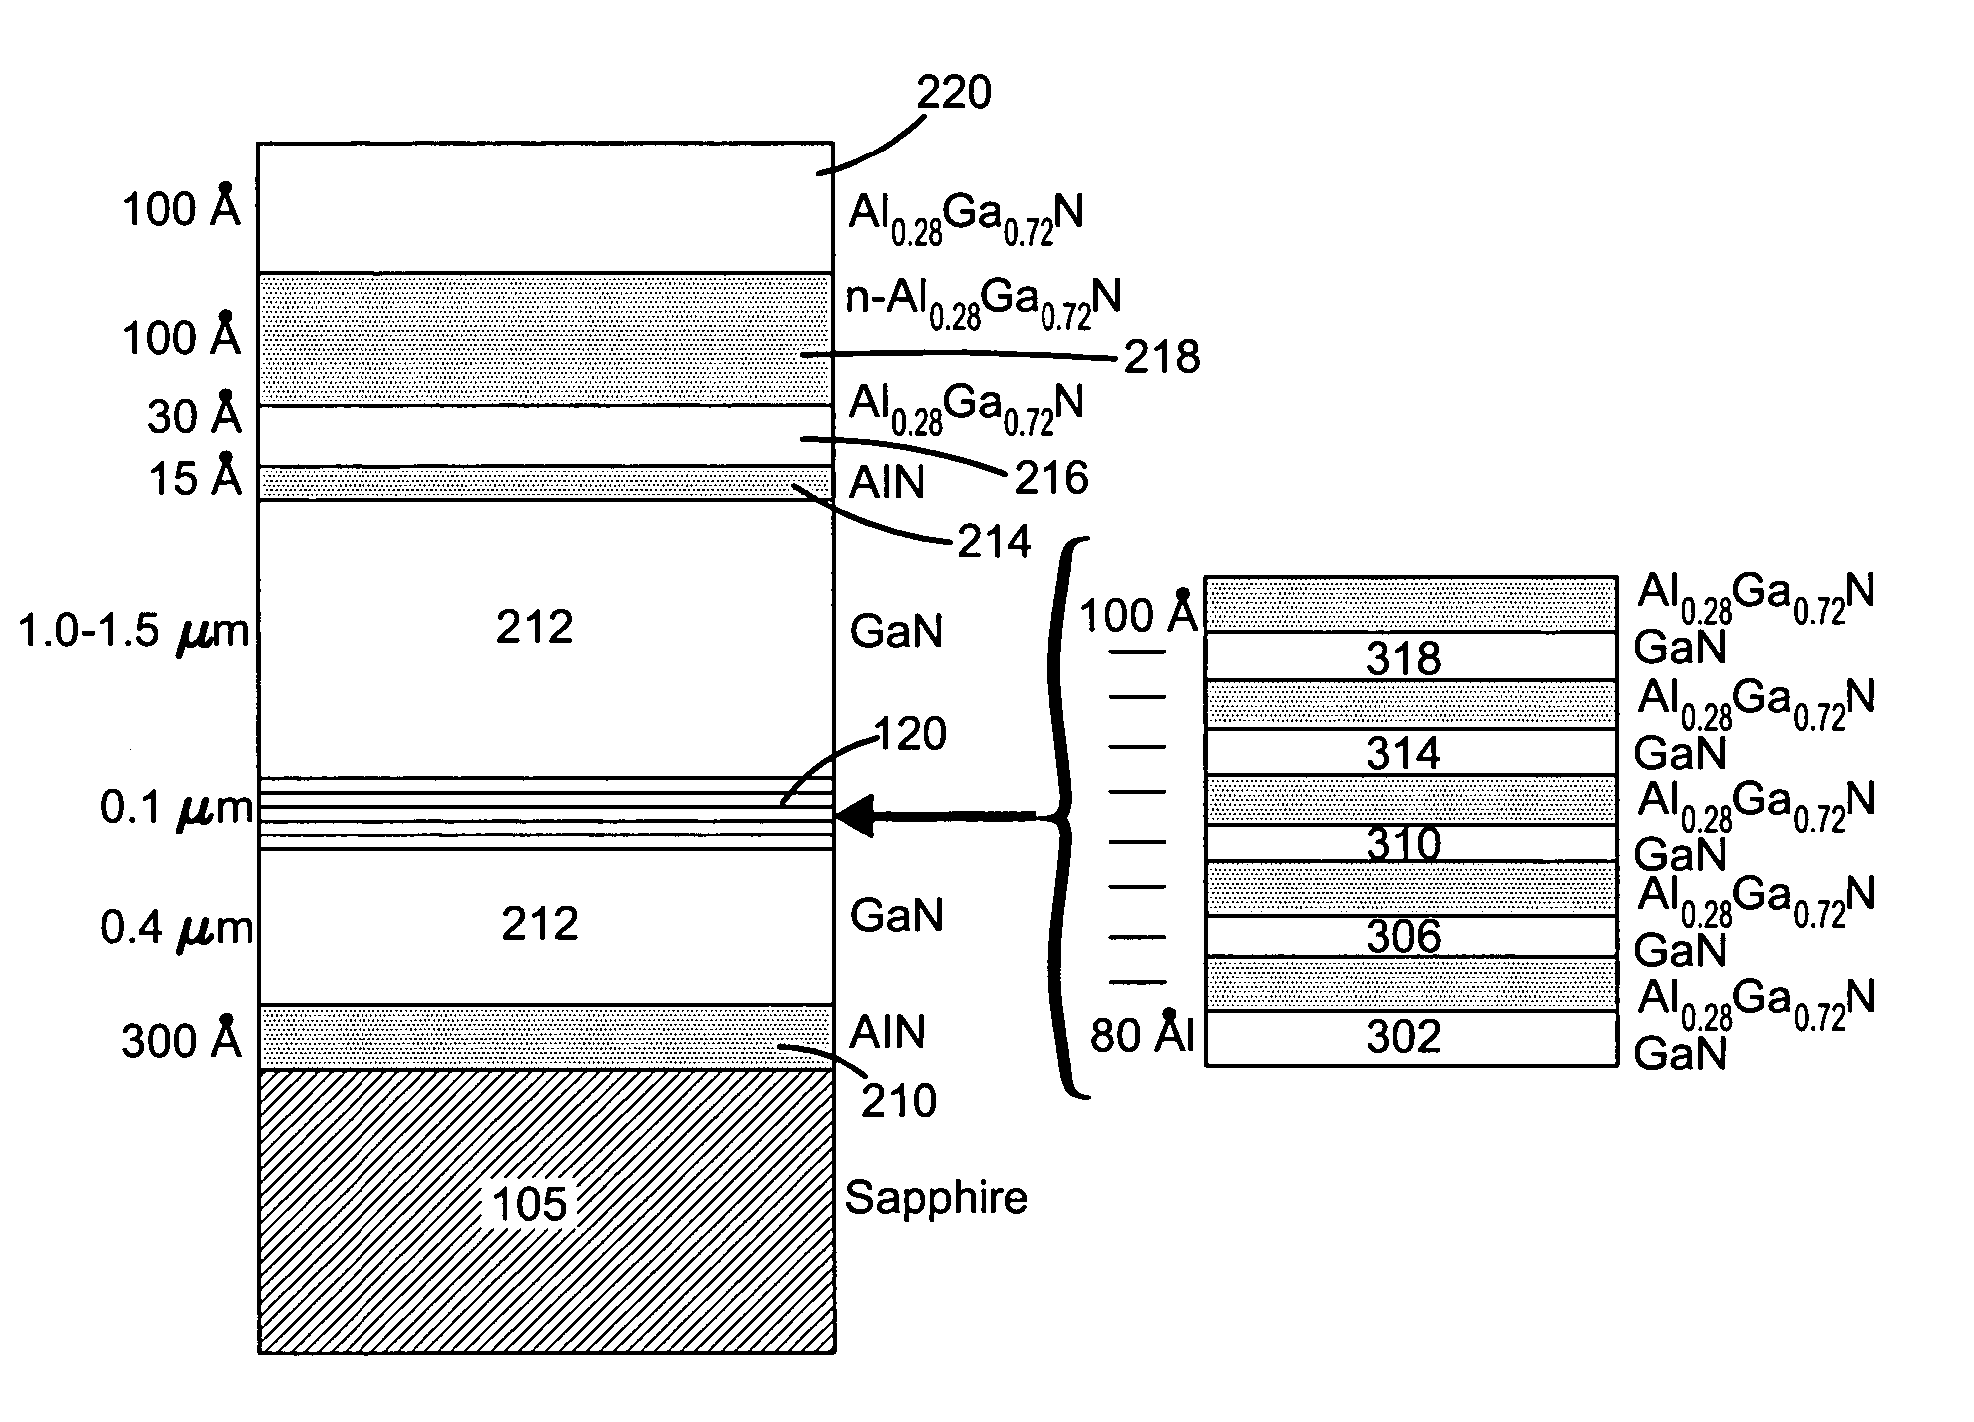 Super lattice modification of overlying transistor